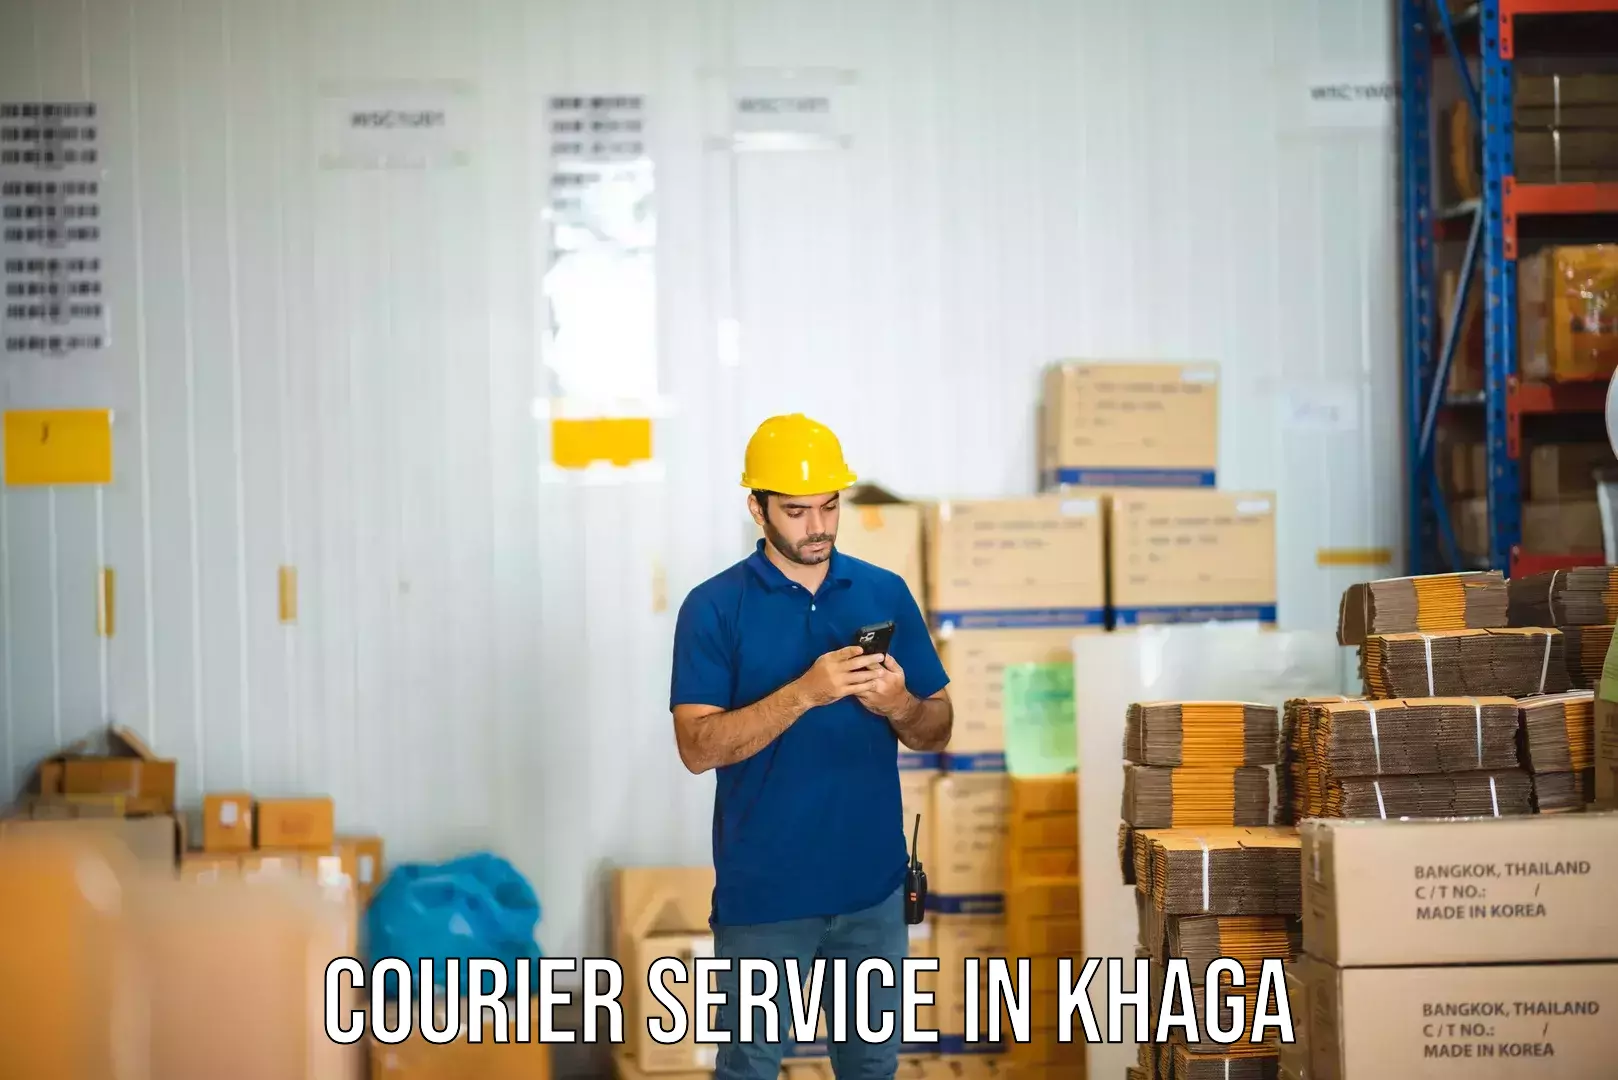 Express courier capabilities in Khaga